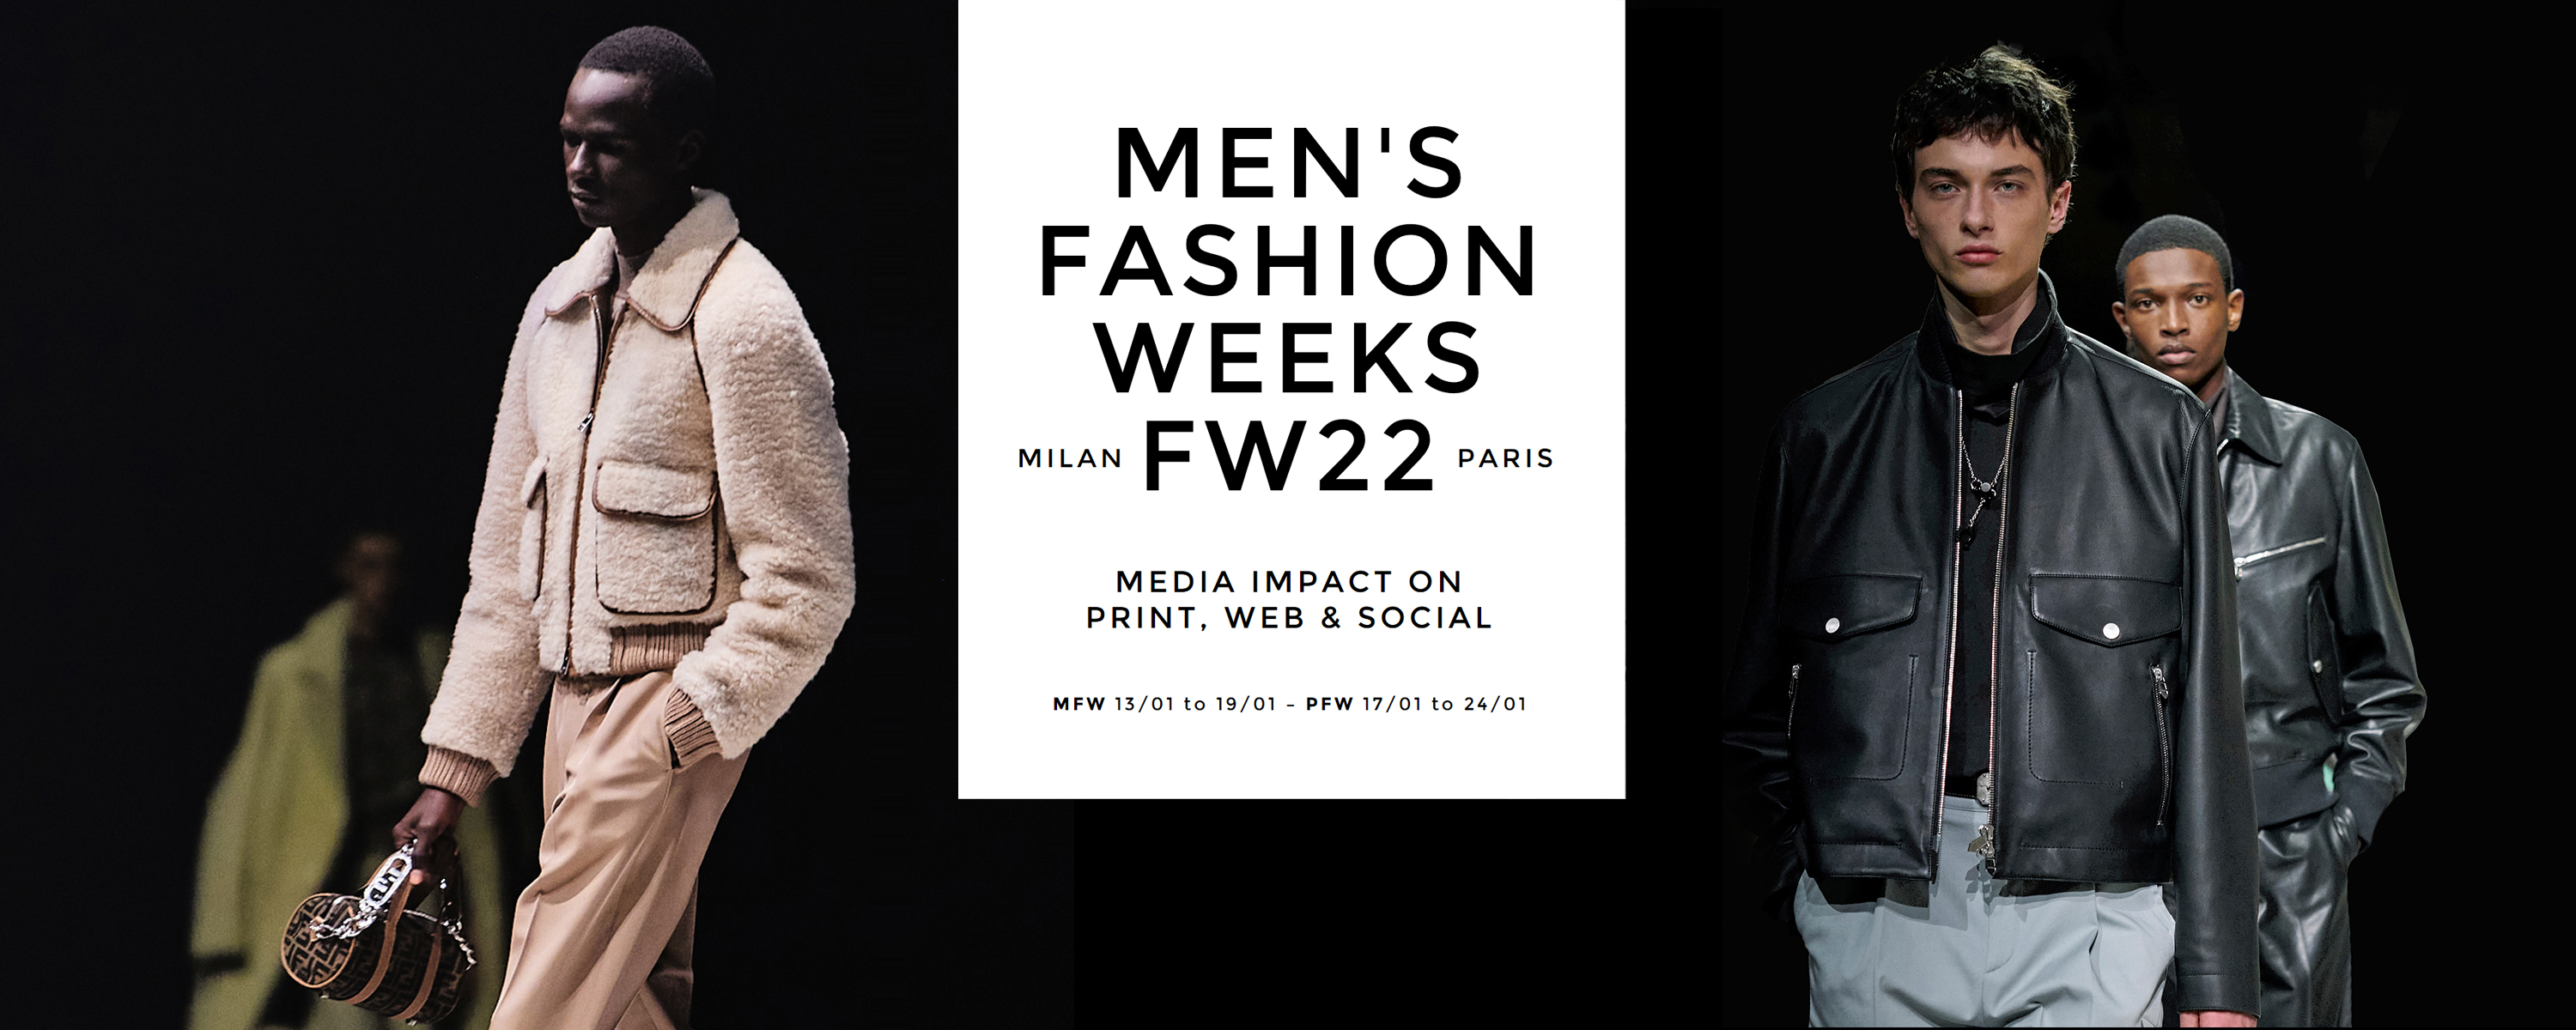 FW22 Men's Fashion Weeks